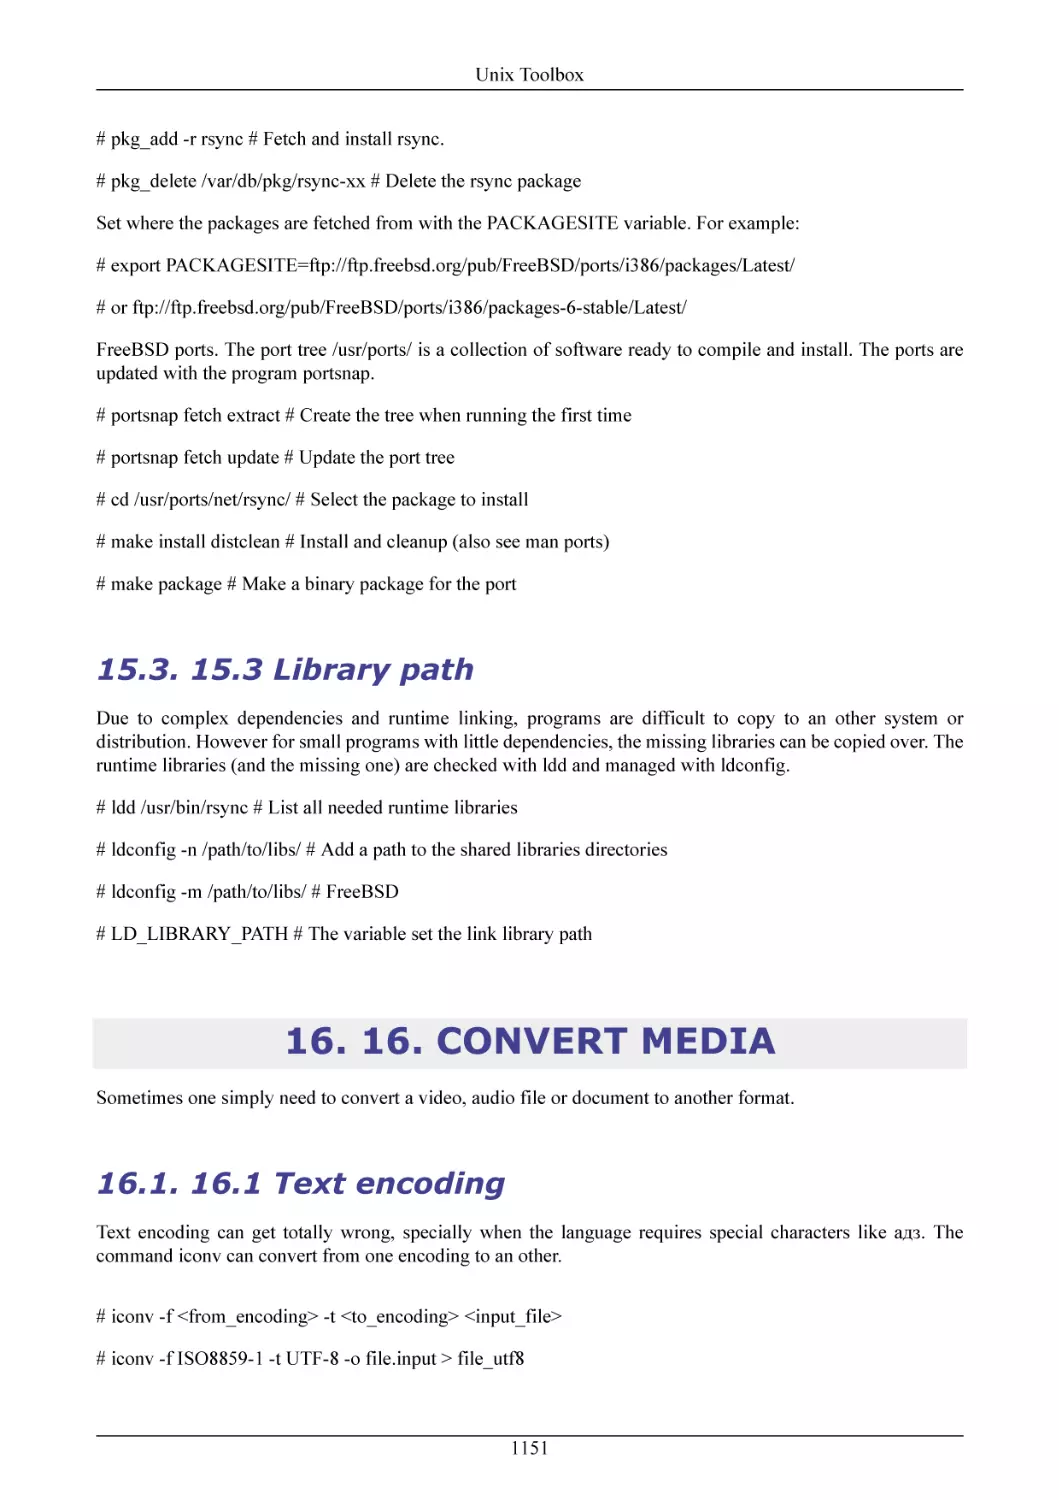 15.3 Library path
16. CONVERT MEDIA
16.1 Text encoding